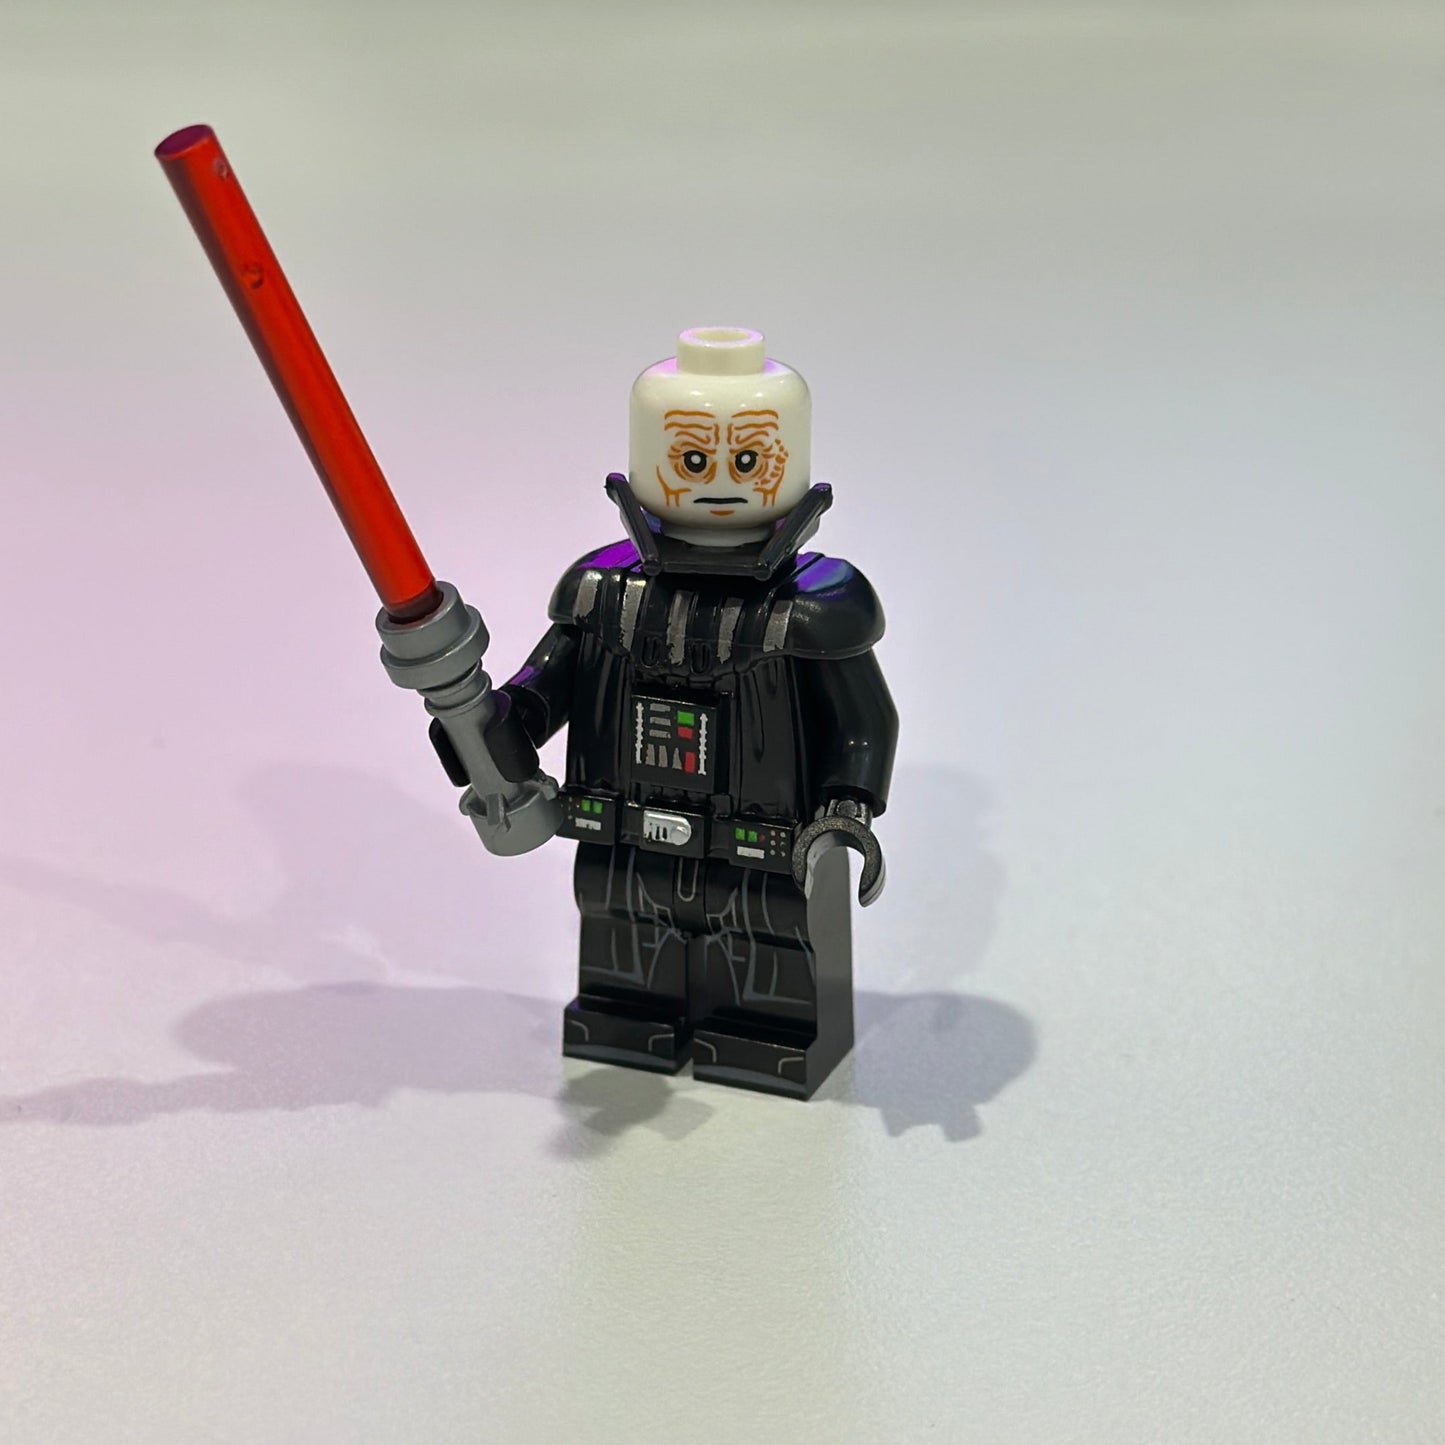 Star Wars Darth Vader Minifigure - Sith